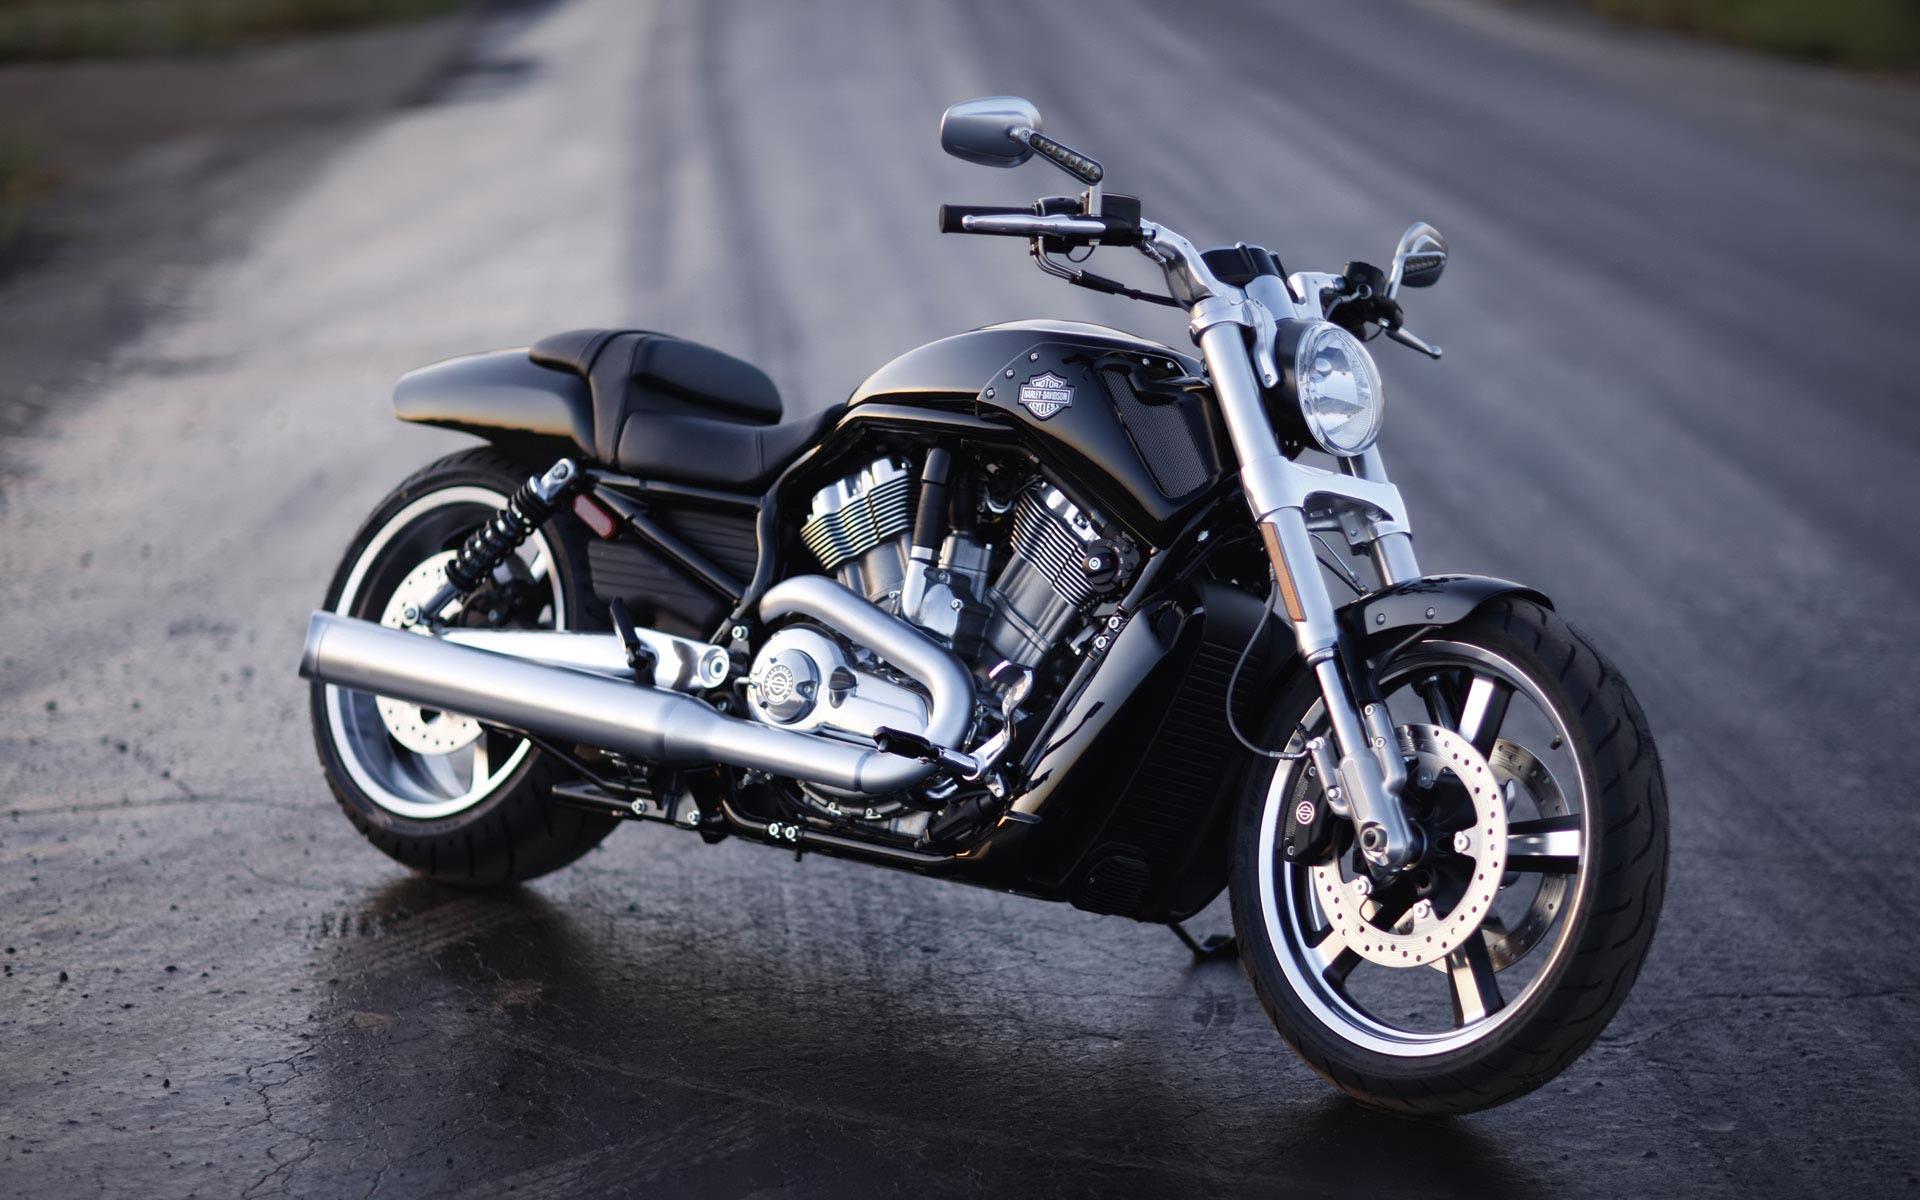 Harley Davidson Motorcycle Wallpaper Backgroun 12125 Full HD